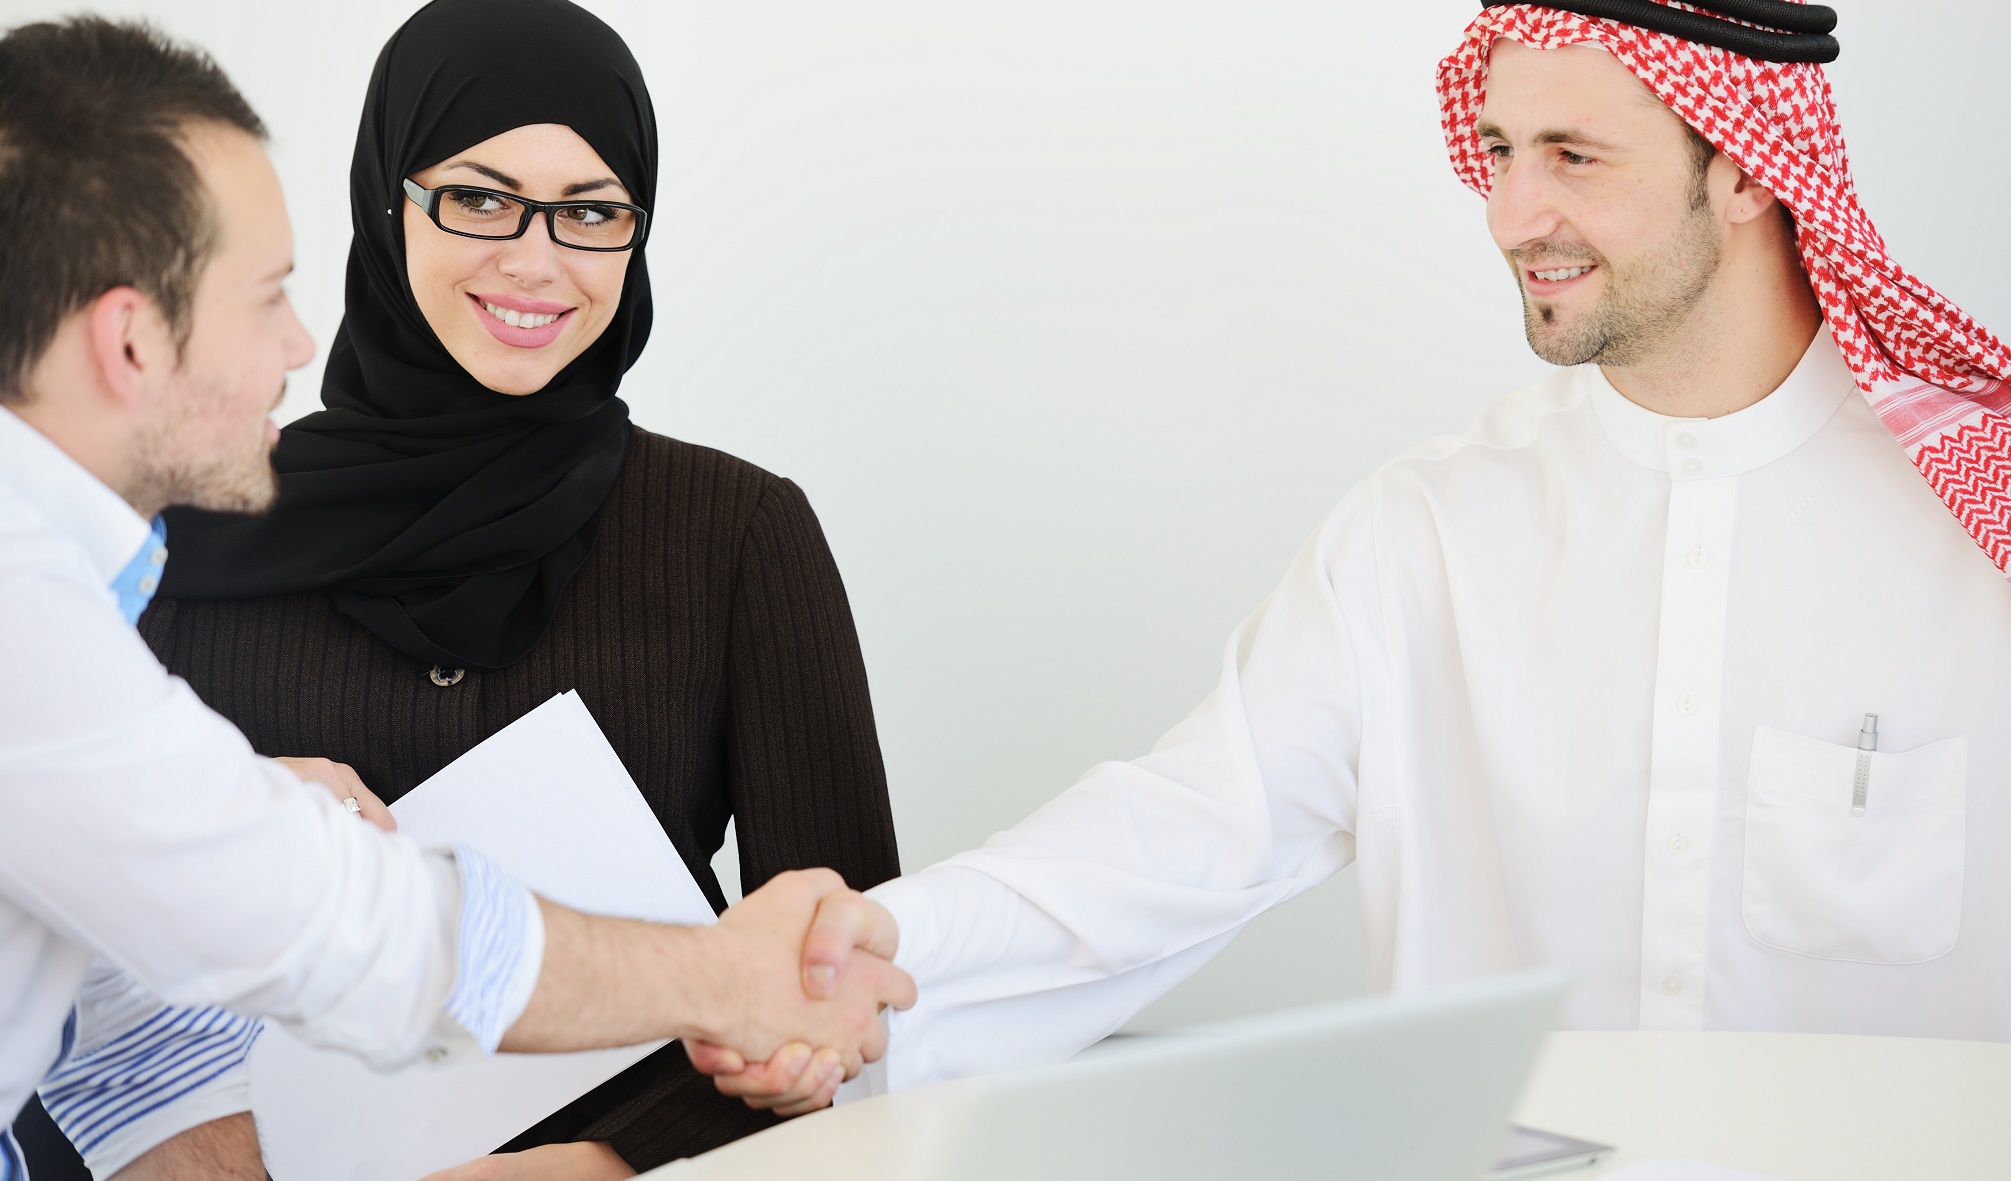 tips to impress saudi arabia employers with ATS resume